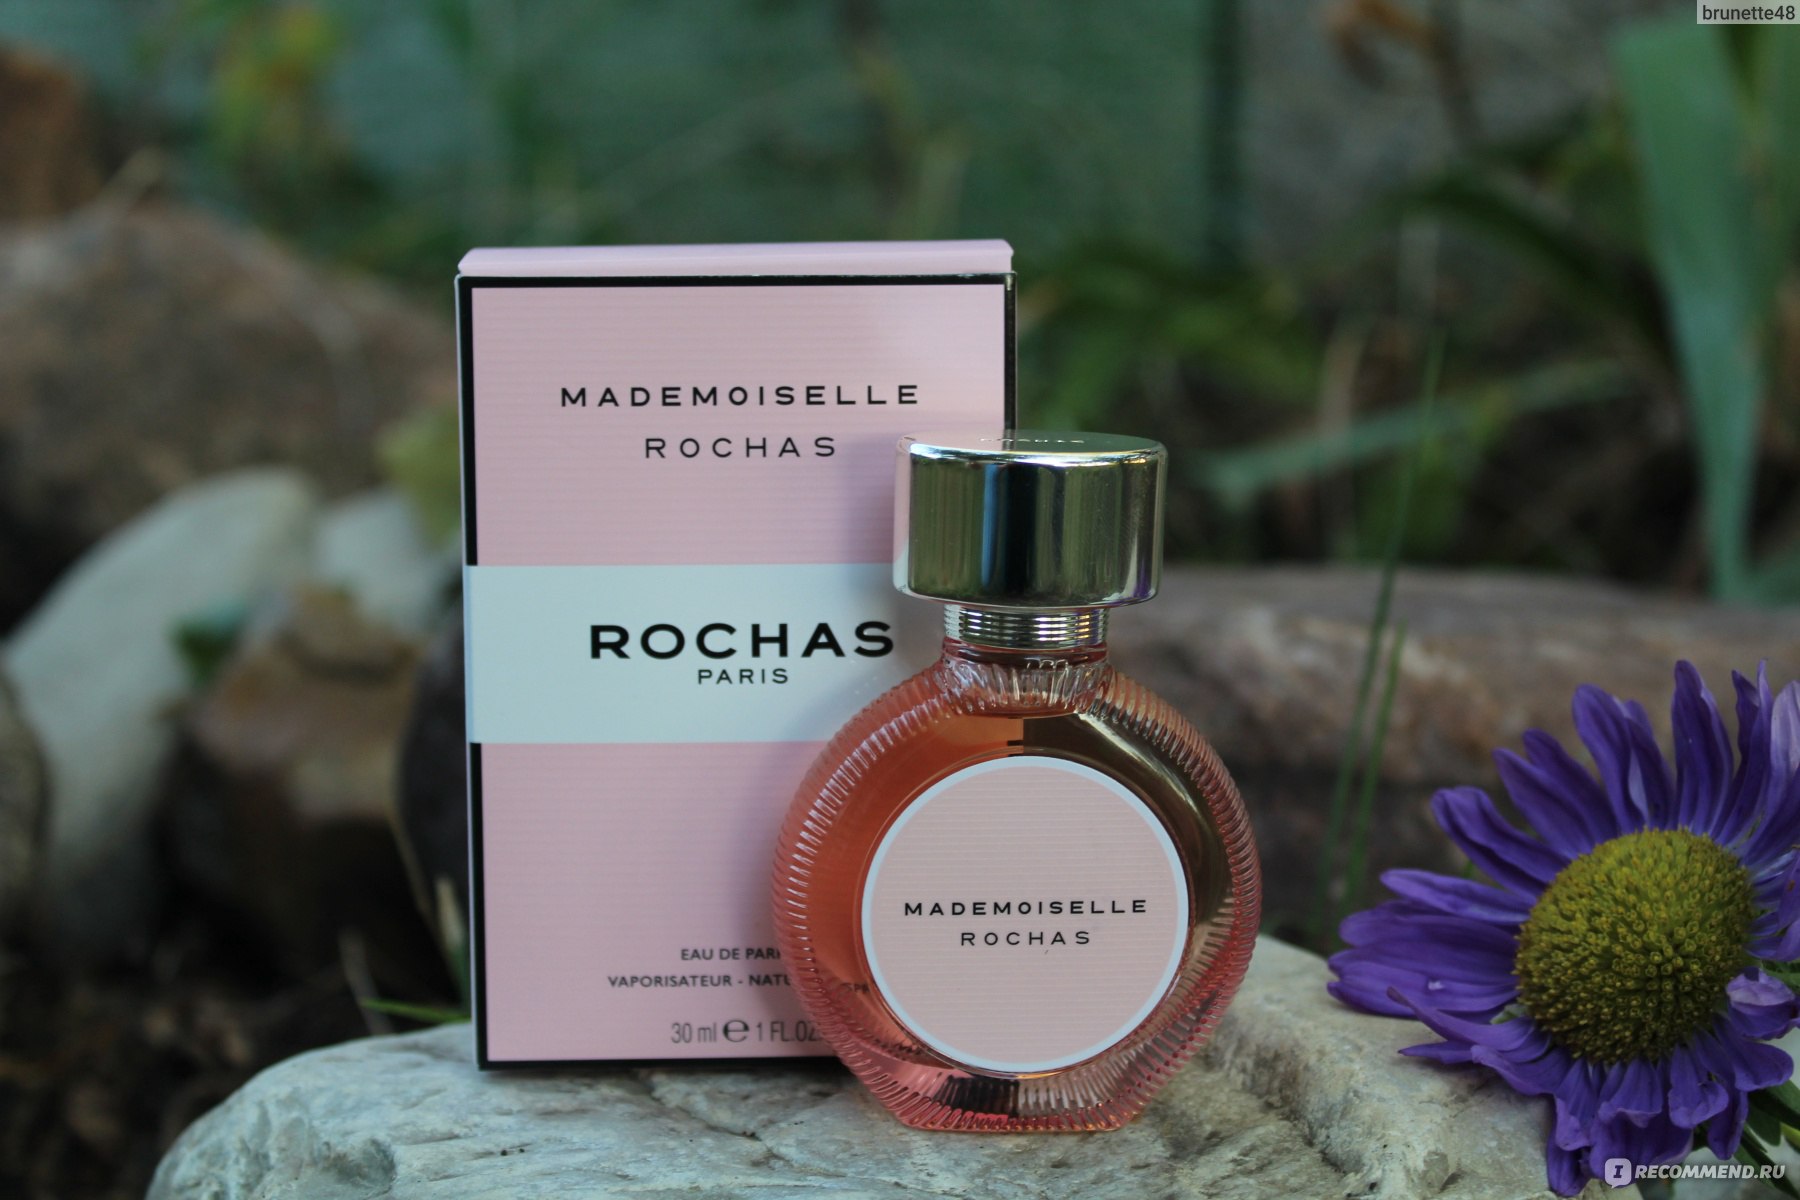 Rochas mademoiselle rochas отзывы. Цветочные духи Rochas мадмуазель. Rochas бренд. Духи Rochas 2005 года. Модный дом Rochas.